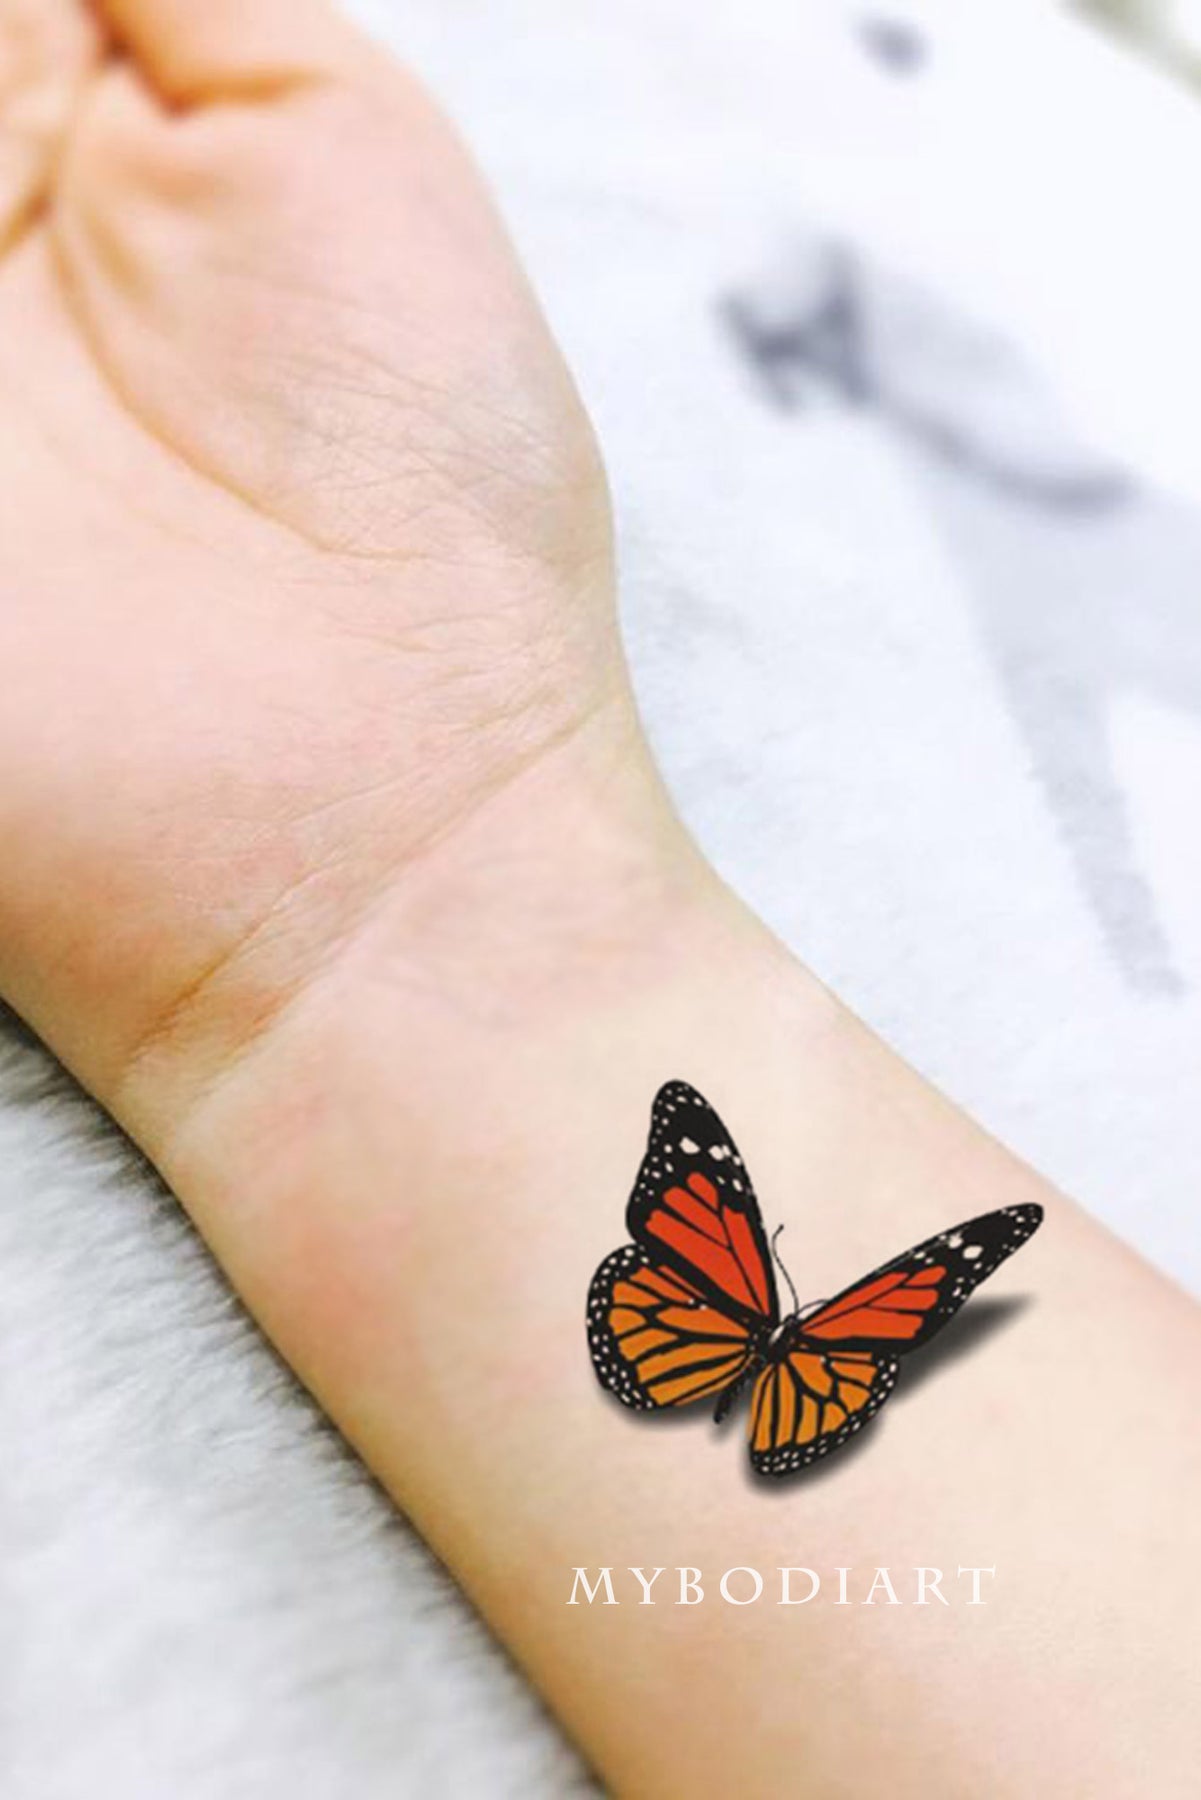 Wylde Sydes Tattoo  Body Piercing on Twitter Color Monarch Butterfly  Tattoo By Anthony httpstco3UZuHLgjvj tattoo tattoos ink inked  butterflytattoo sandiegotattooarist sandiegotattooshop colortattoo  wristtattoo girlytattoo 